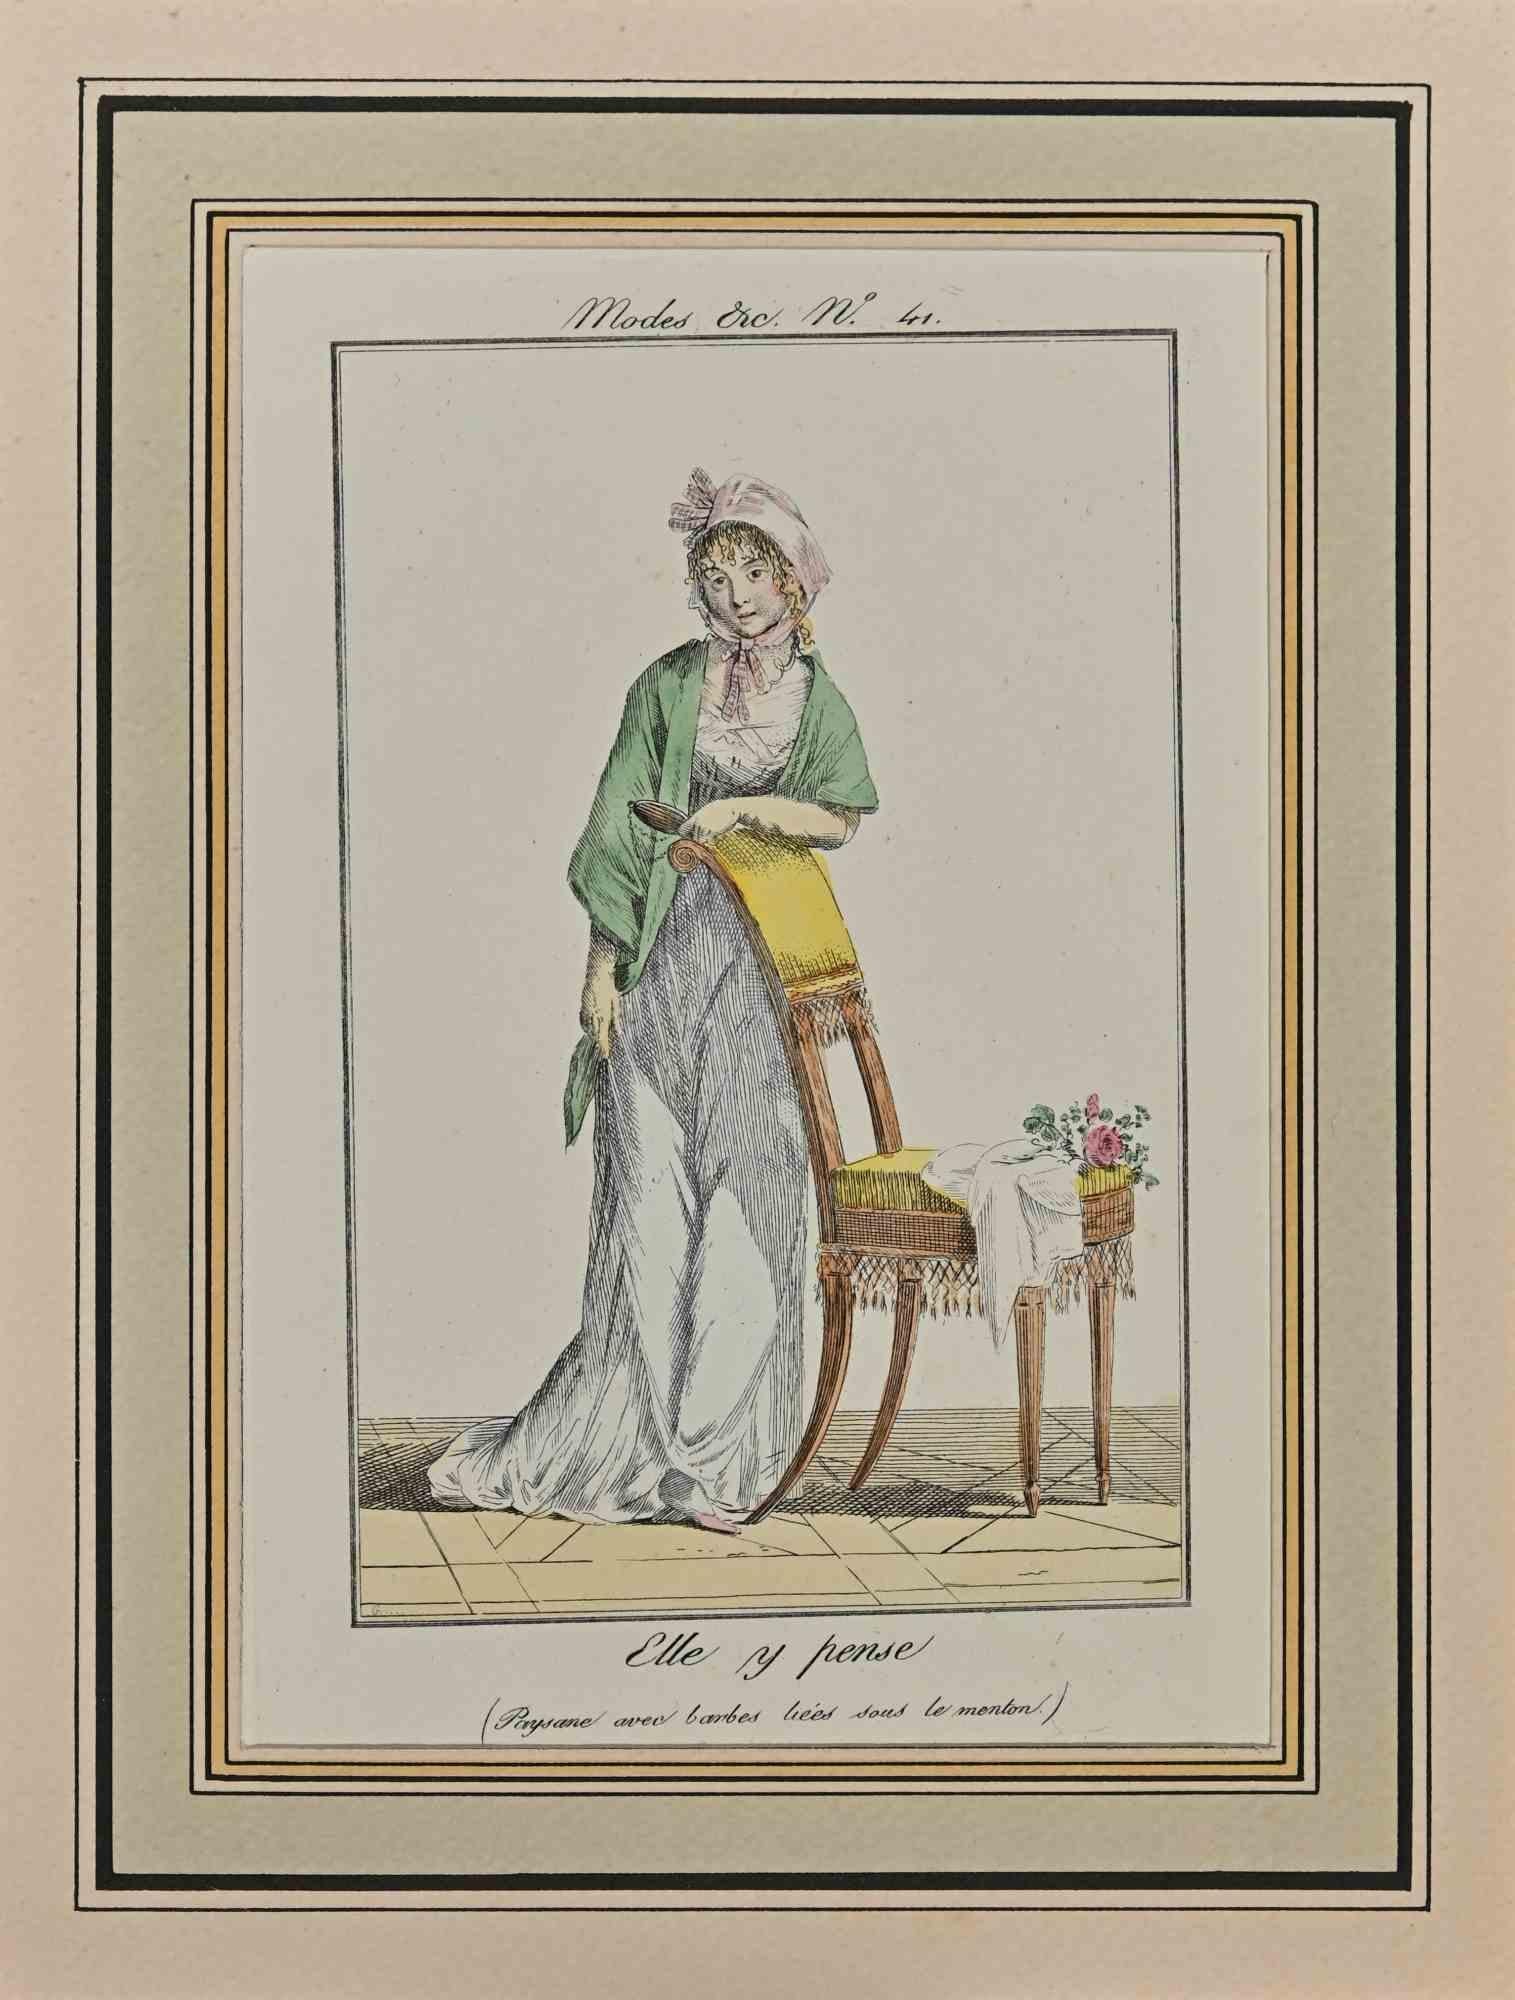 Elle y Pense - Etching by Philibert-Louis Debucourt - 1797